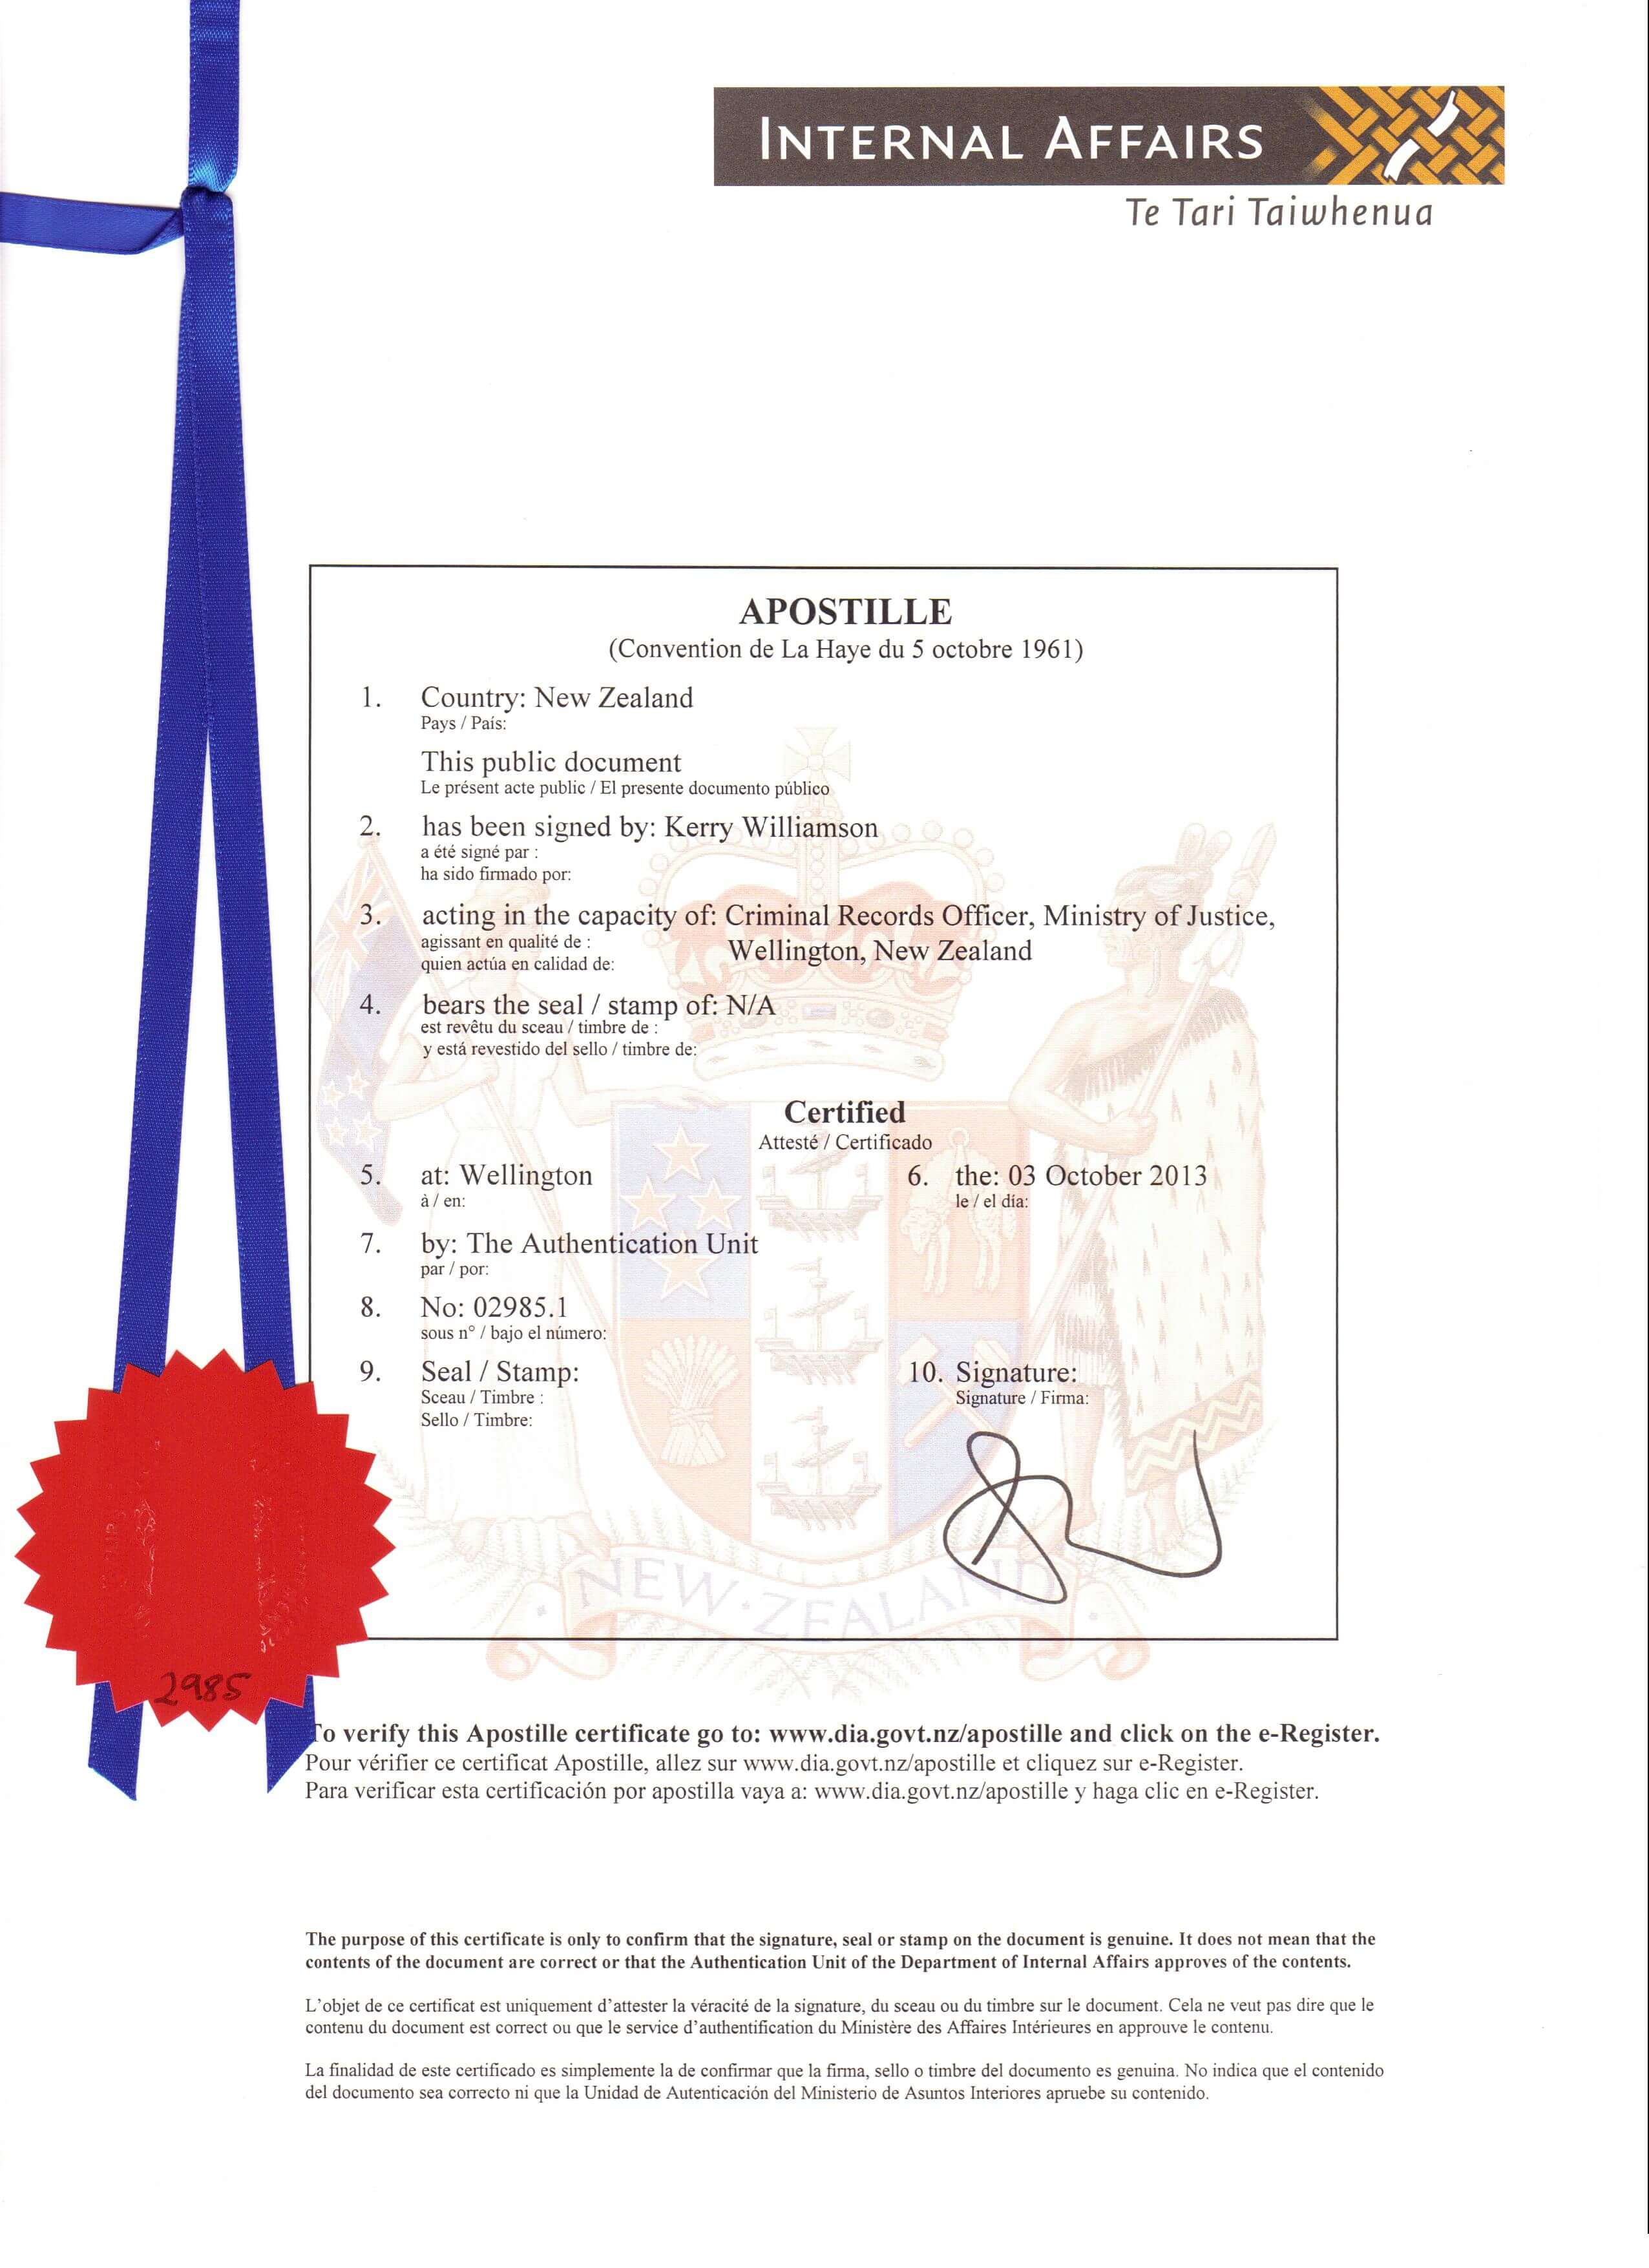 An apostille certificate for an E2 visa applicant